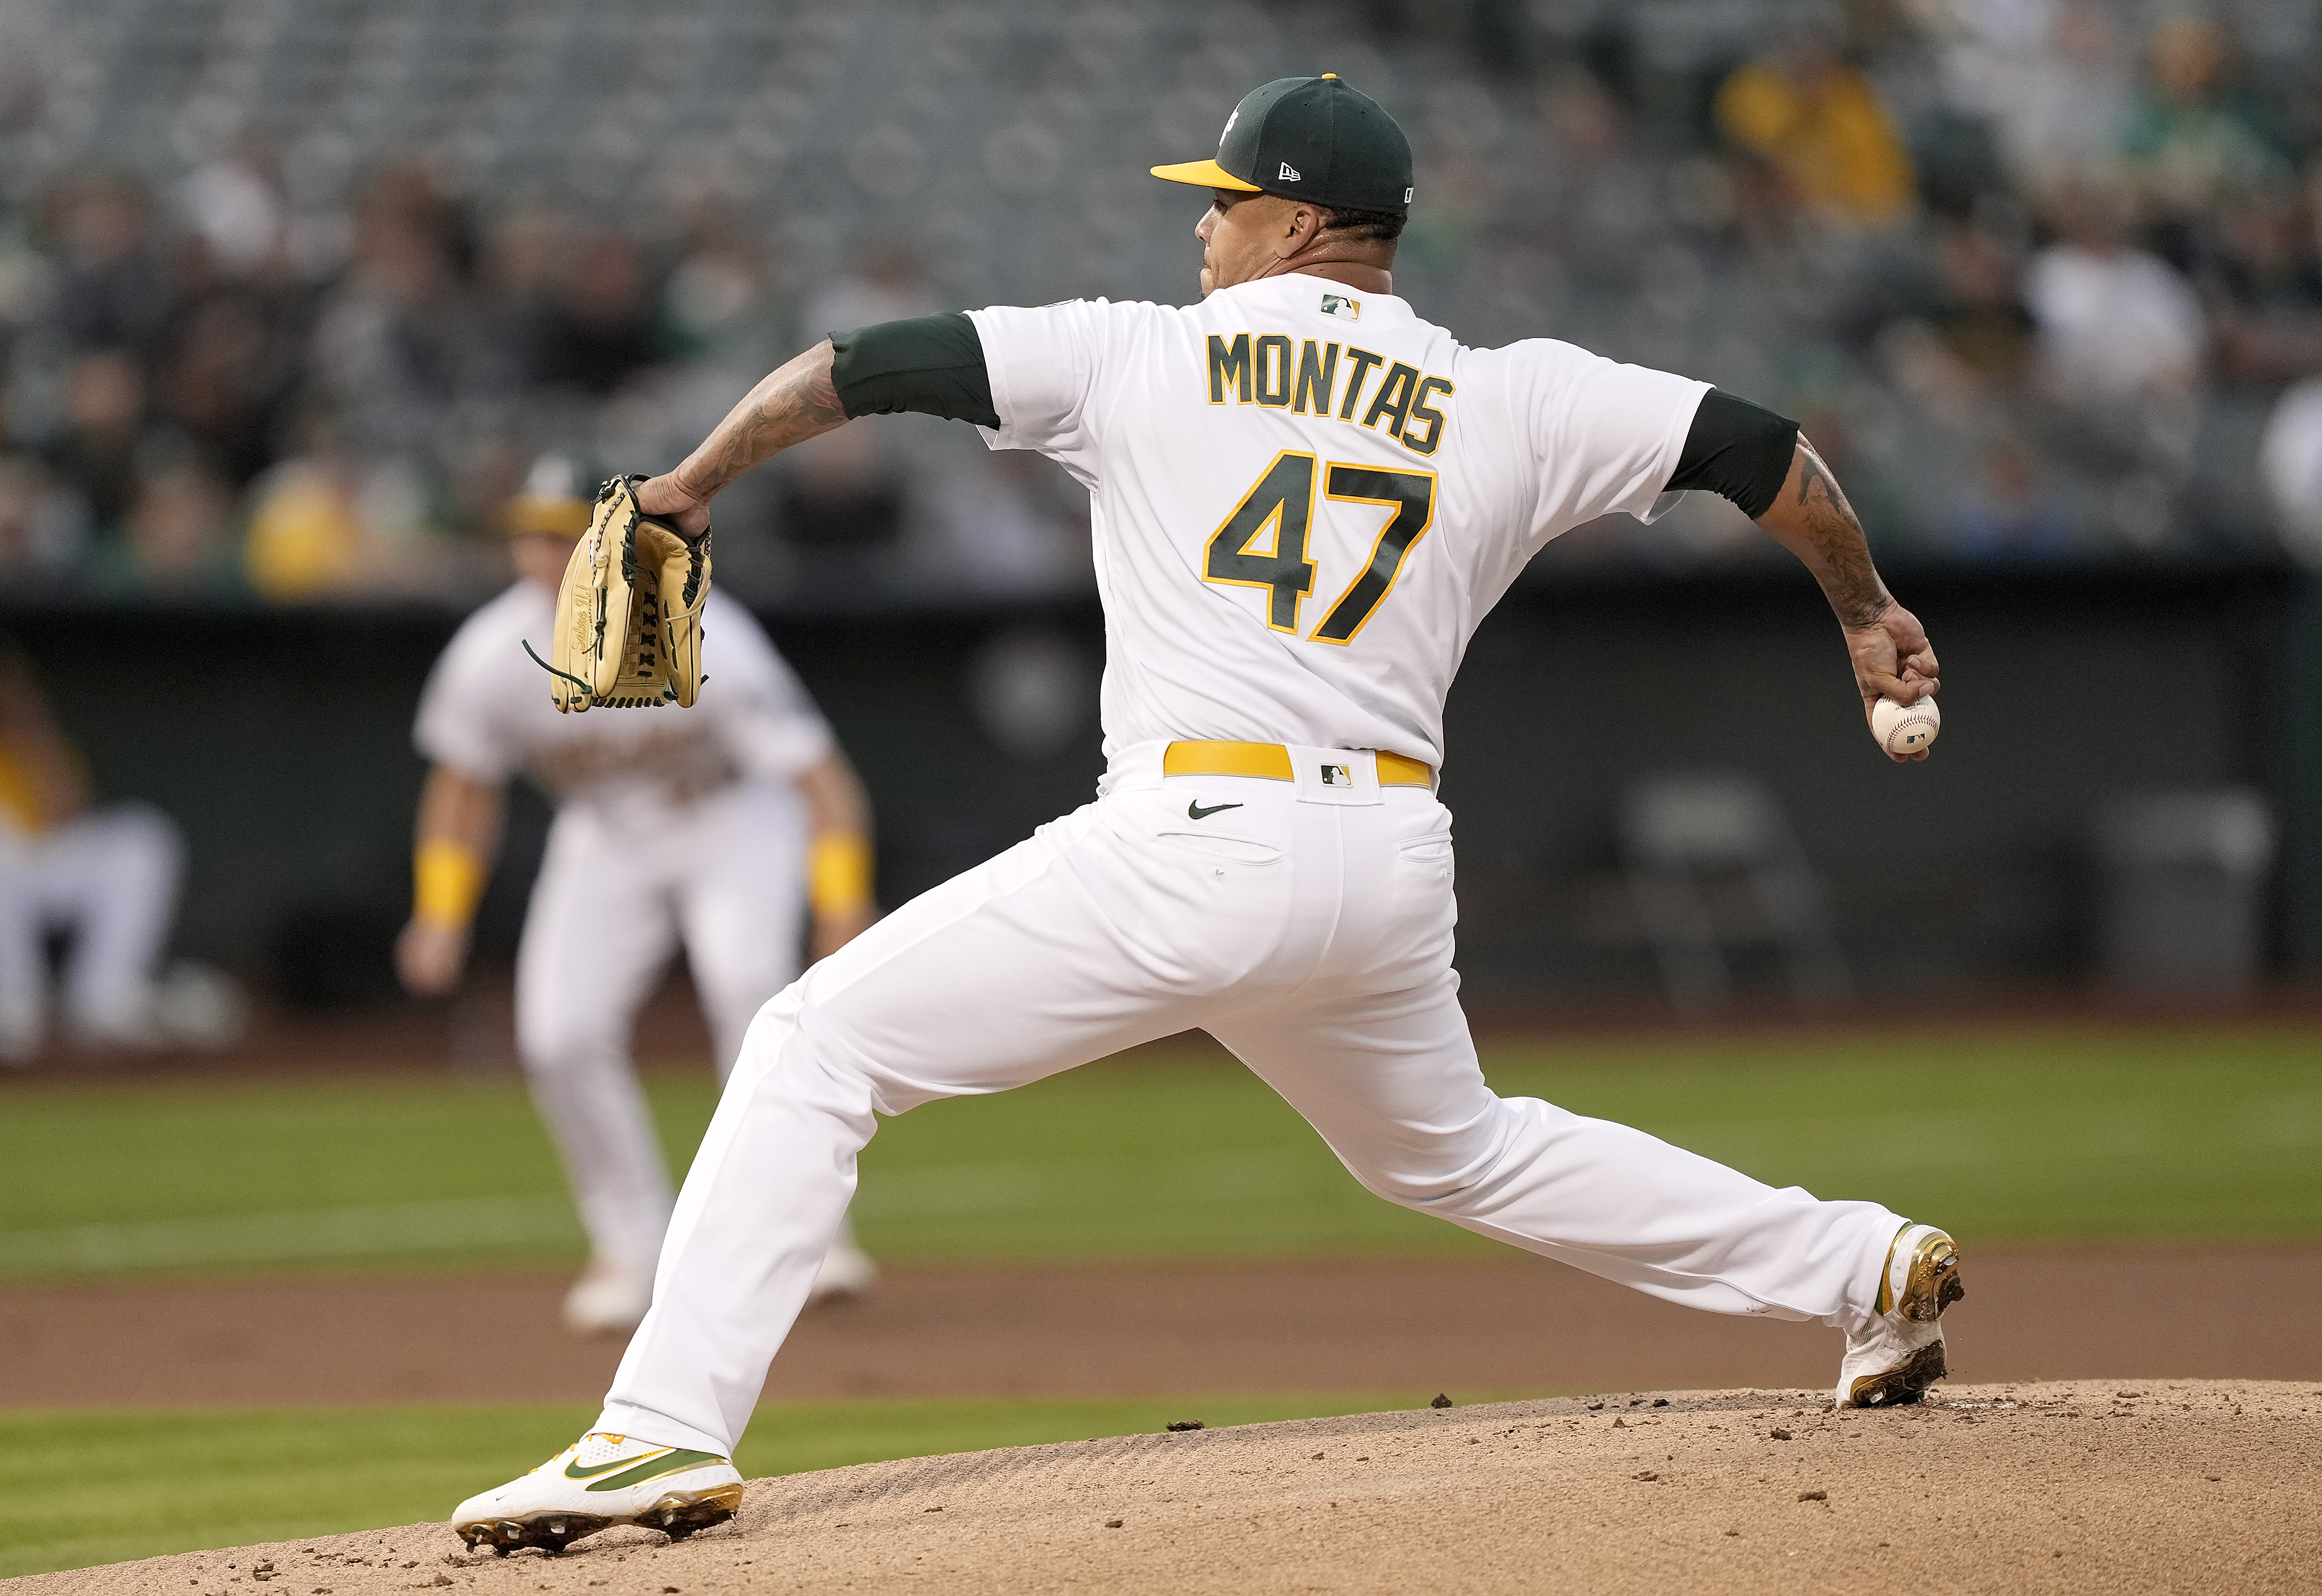 Athletics news: Frankie Montas gets injury update ahead of trade